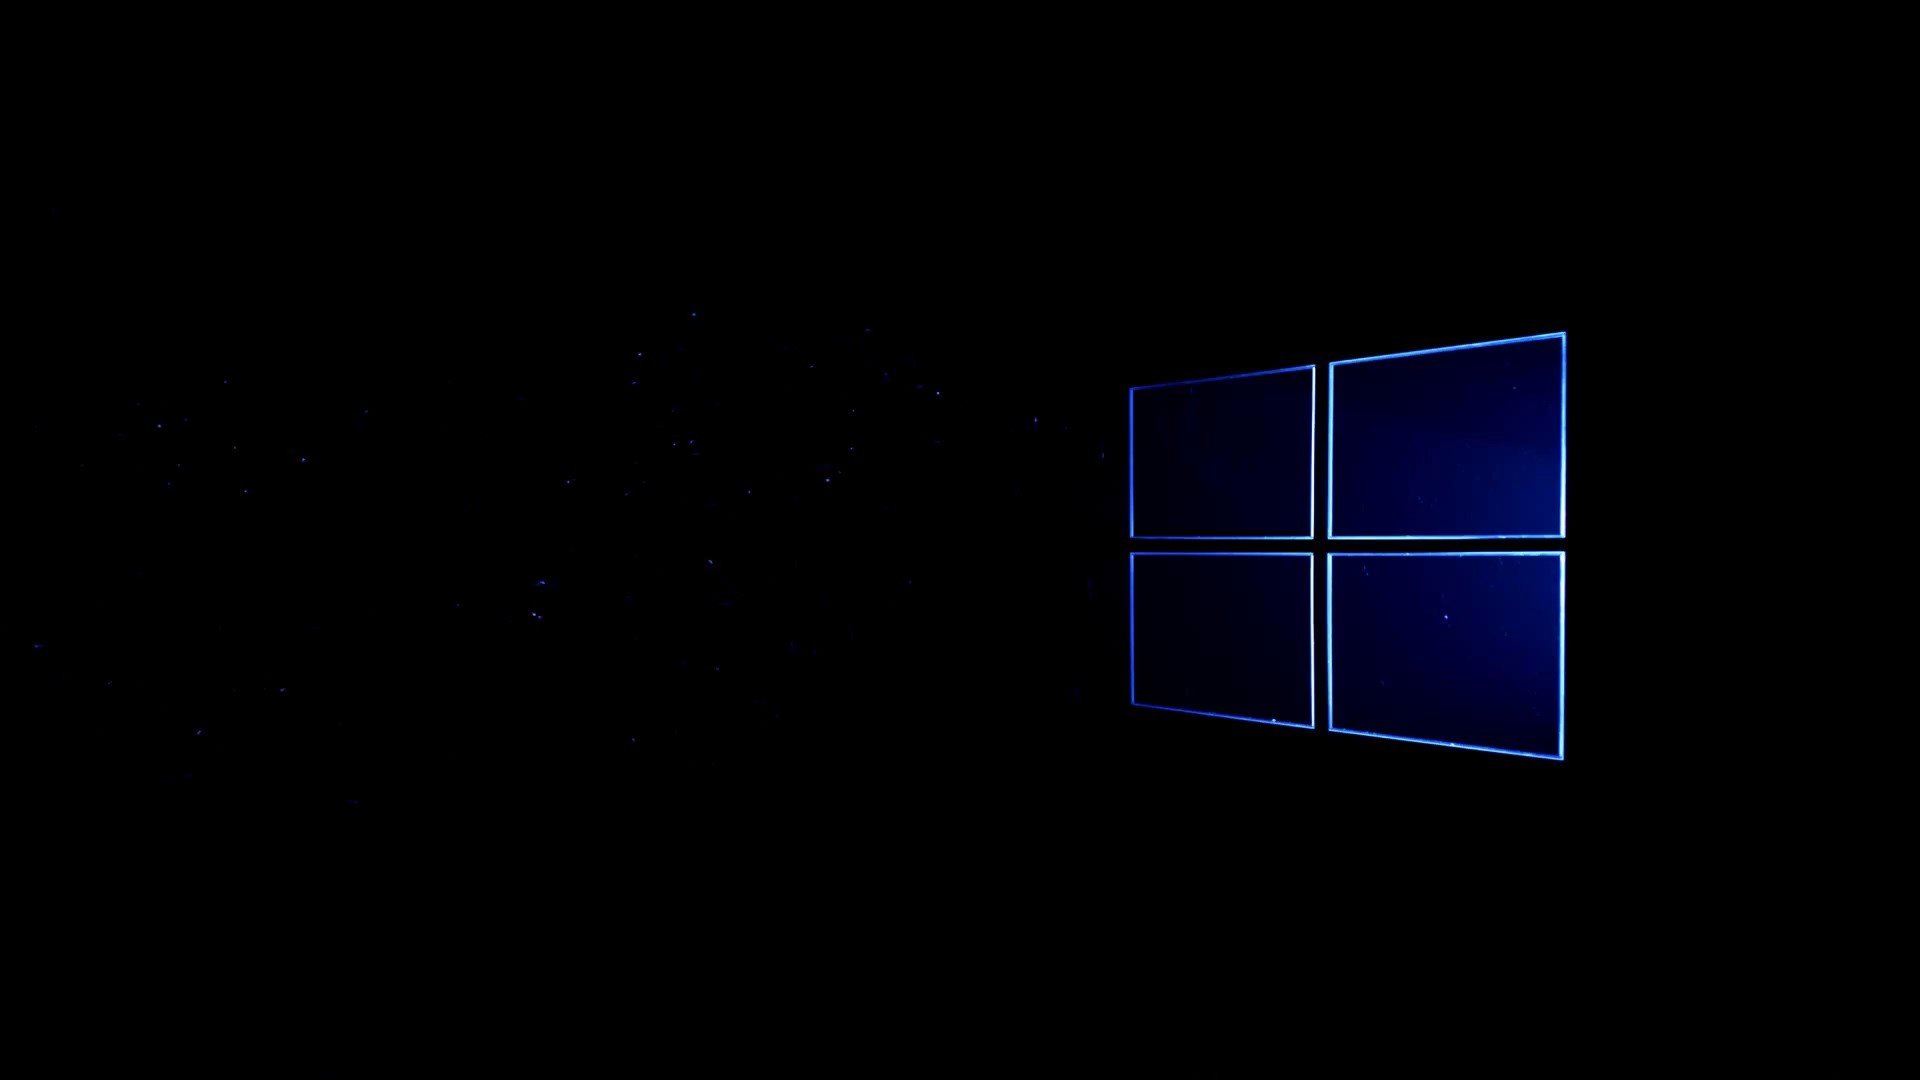 Microsoft Reveals the Official Windows 10 Wallpaper 1920x1080